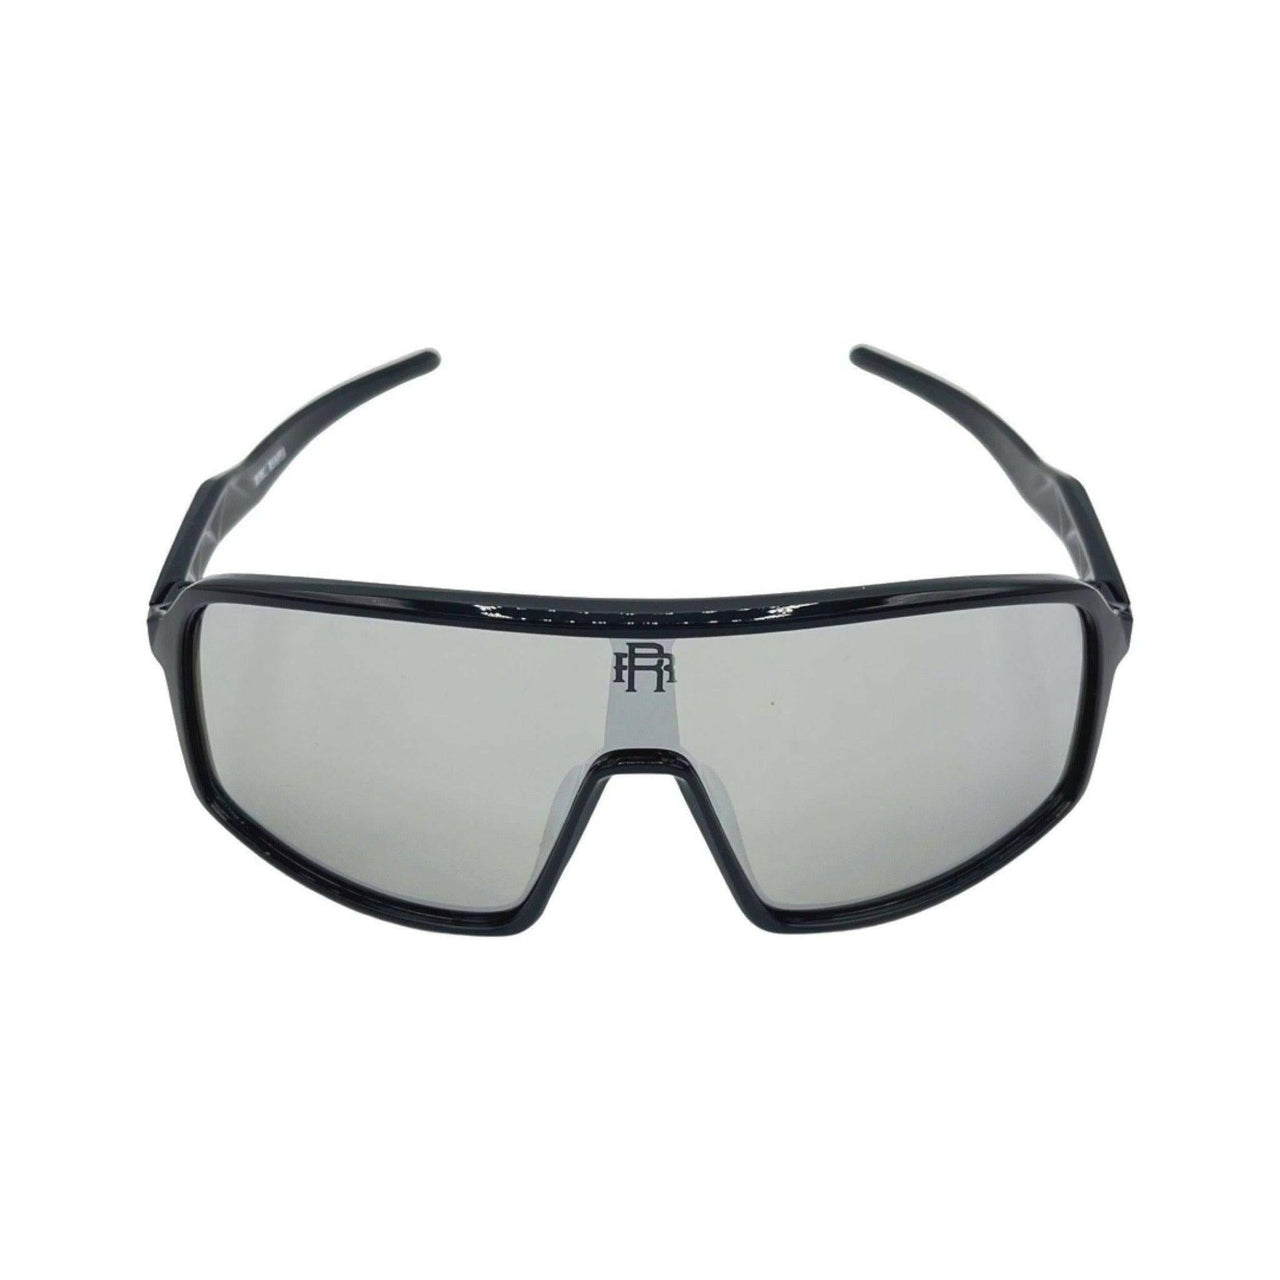 Yeti Silver Mirrored Polarized Lens Sunglasses - Rebel Reaper Clothing Company Sunglasses